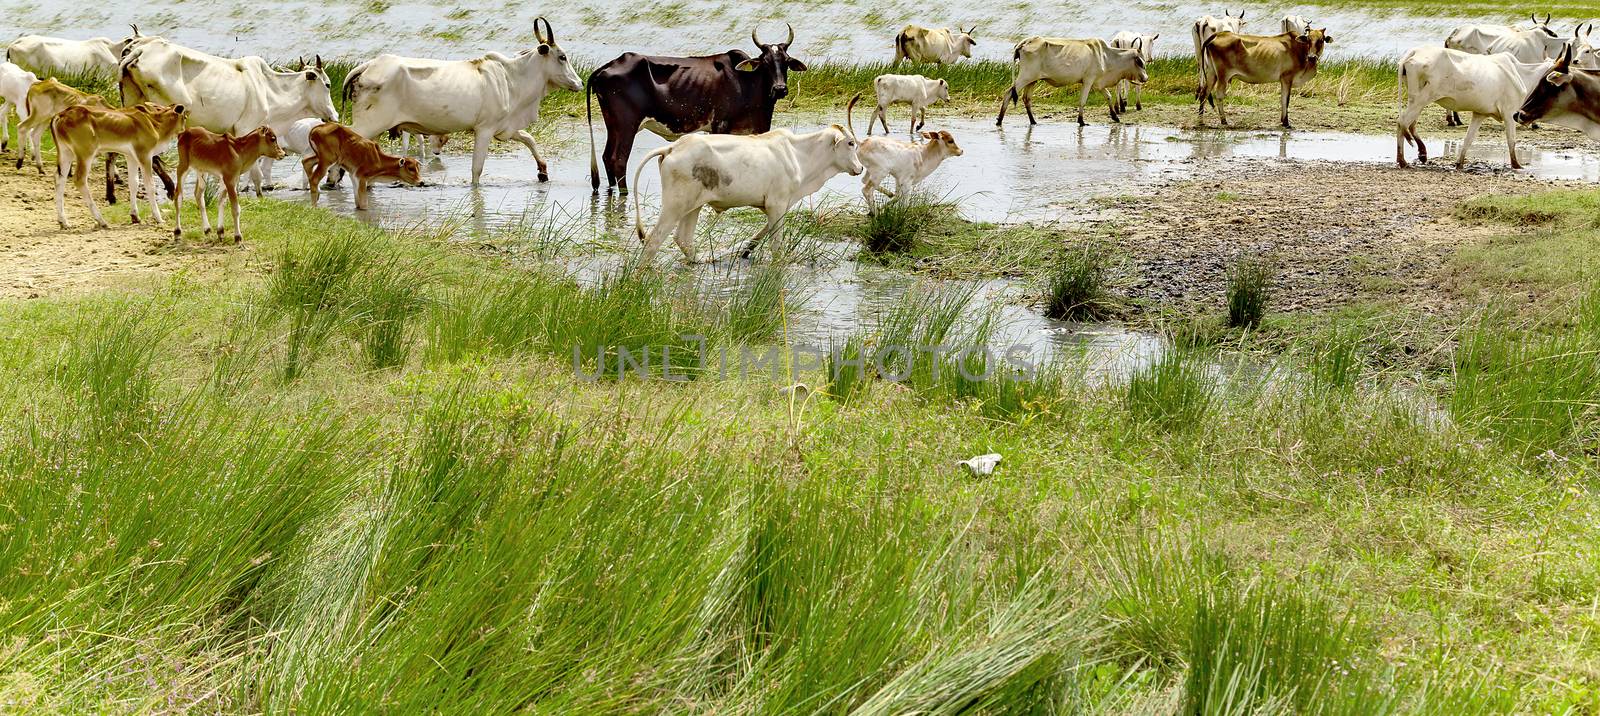 Zebu domestic cattle walking watering place river pasture meadow grass landscape